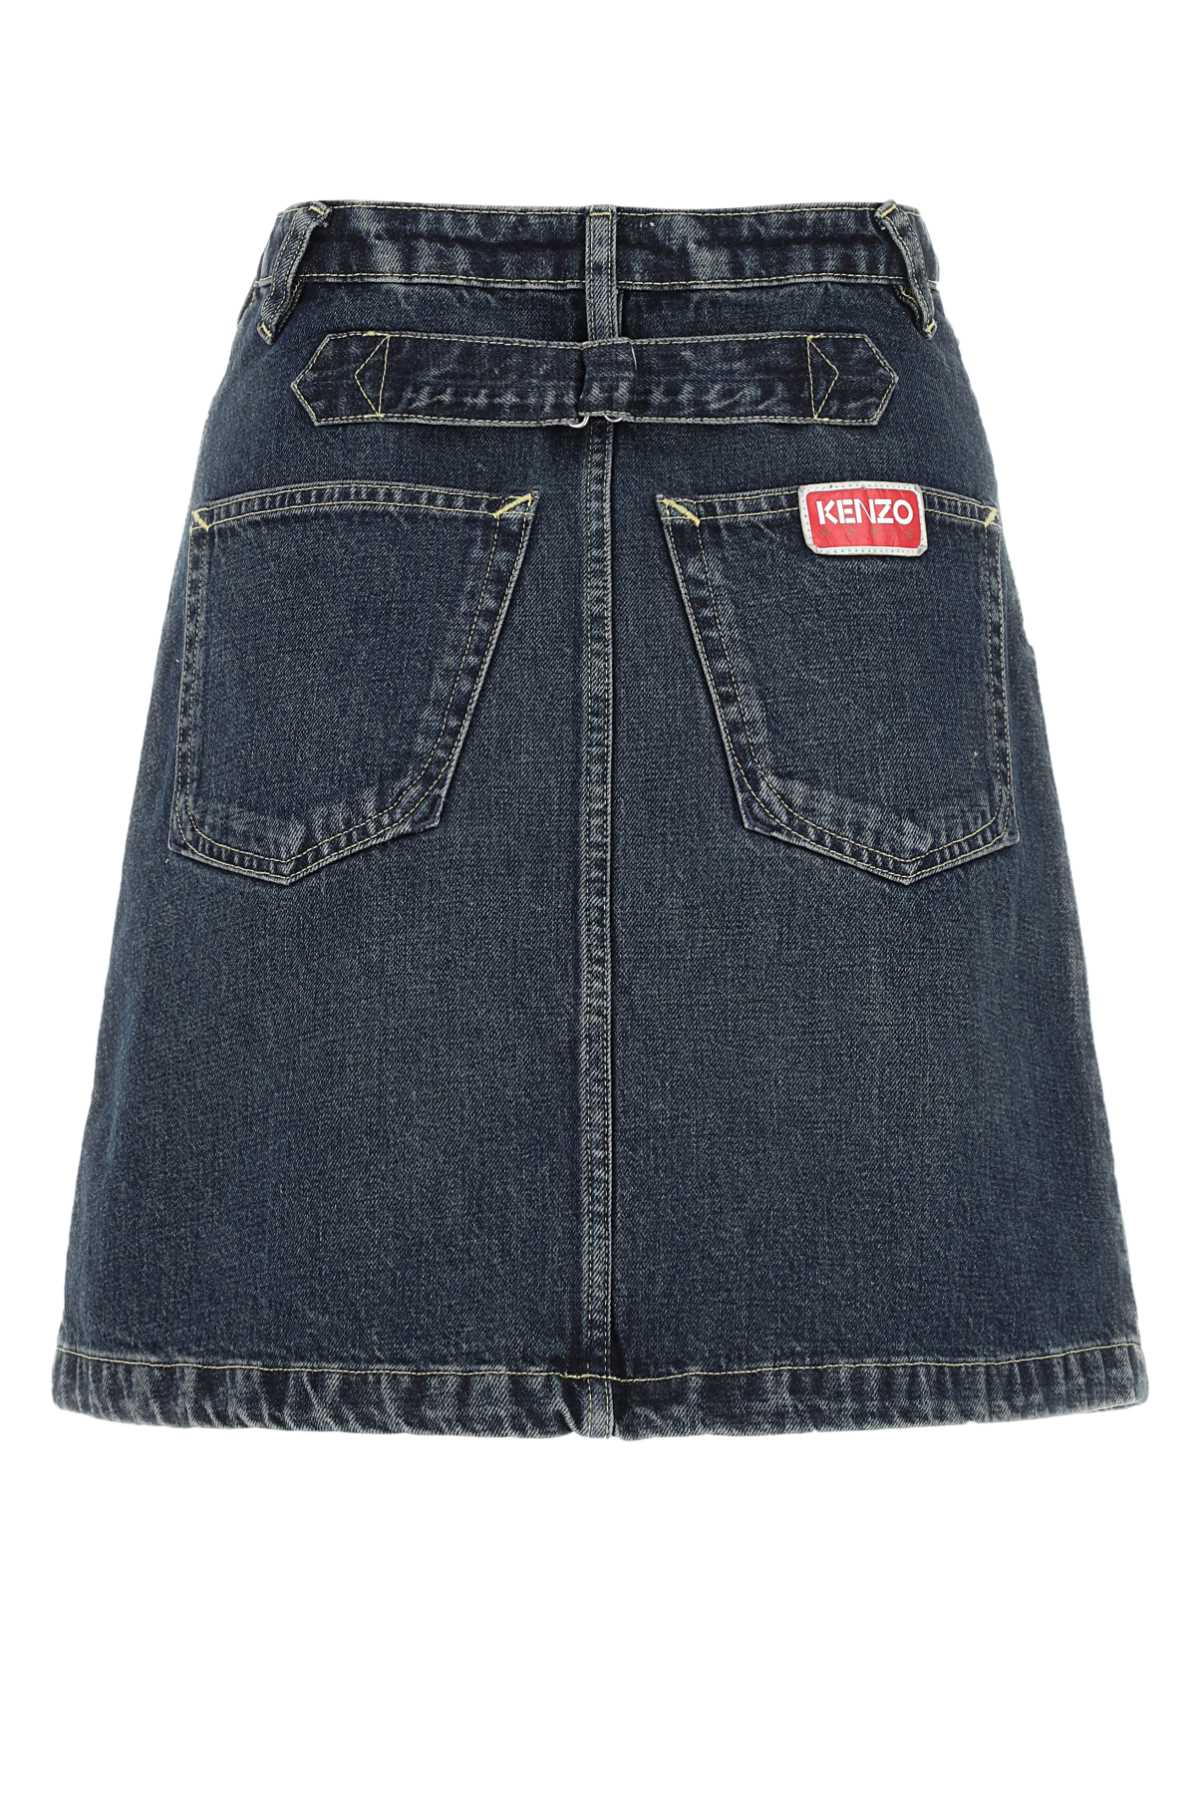 Kenzo Denim Mini Skirt In Dd